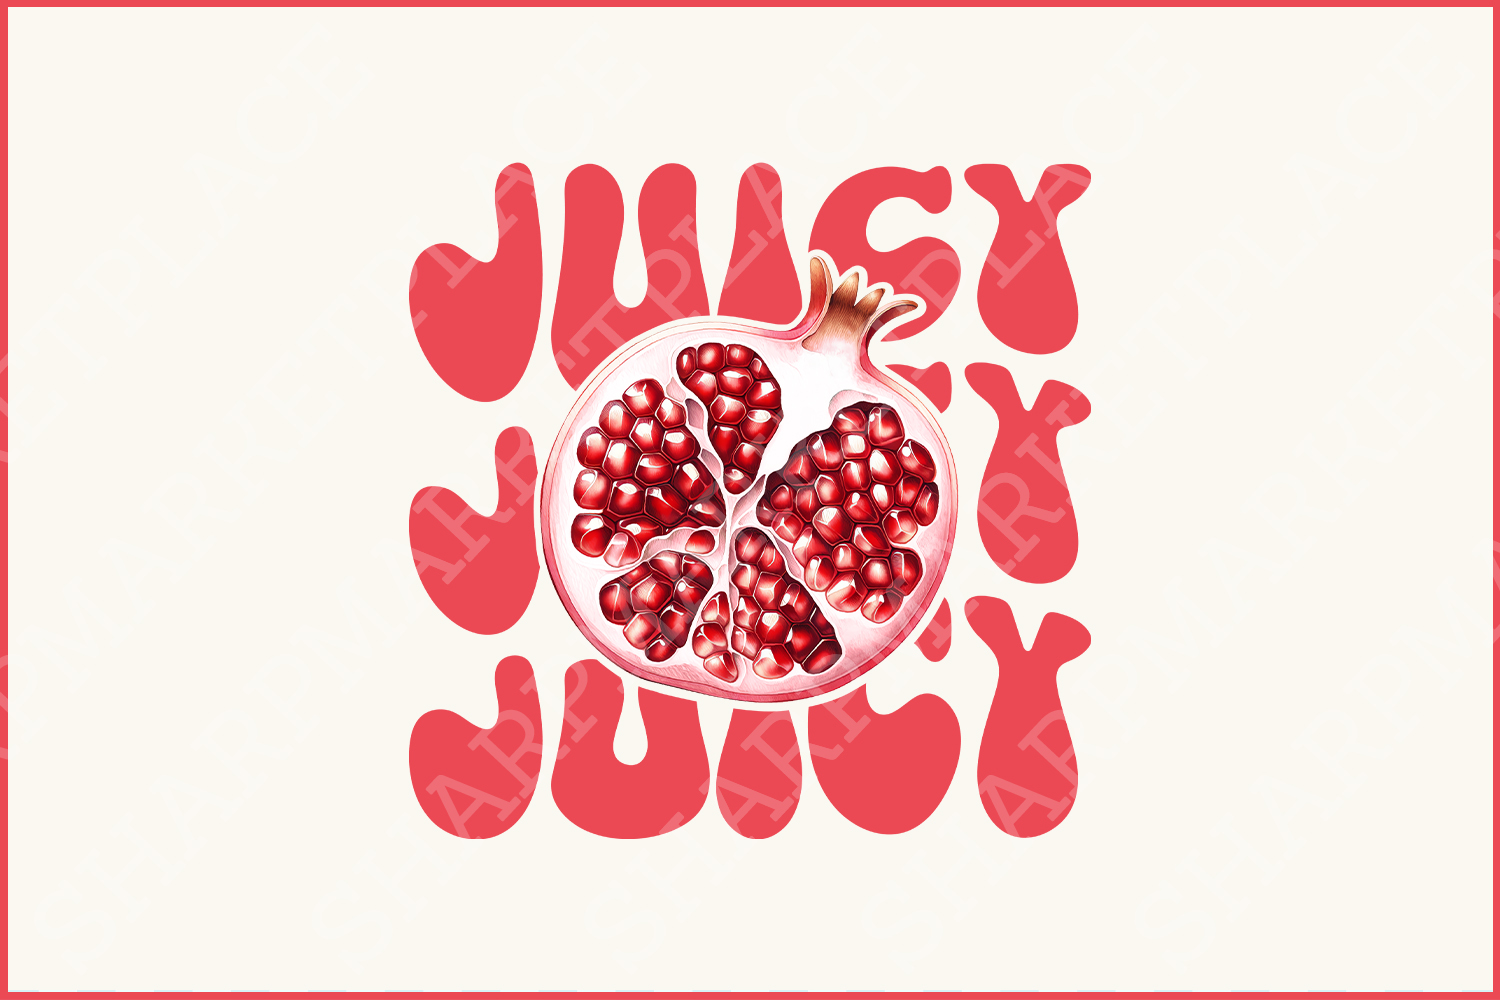 Juicy Pomegranate PNG, Trendy Designs, Juicy Fruit Clipart & Y2K Baby Tee, Unique Aesthetic